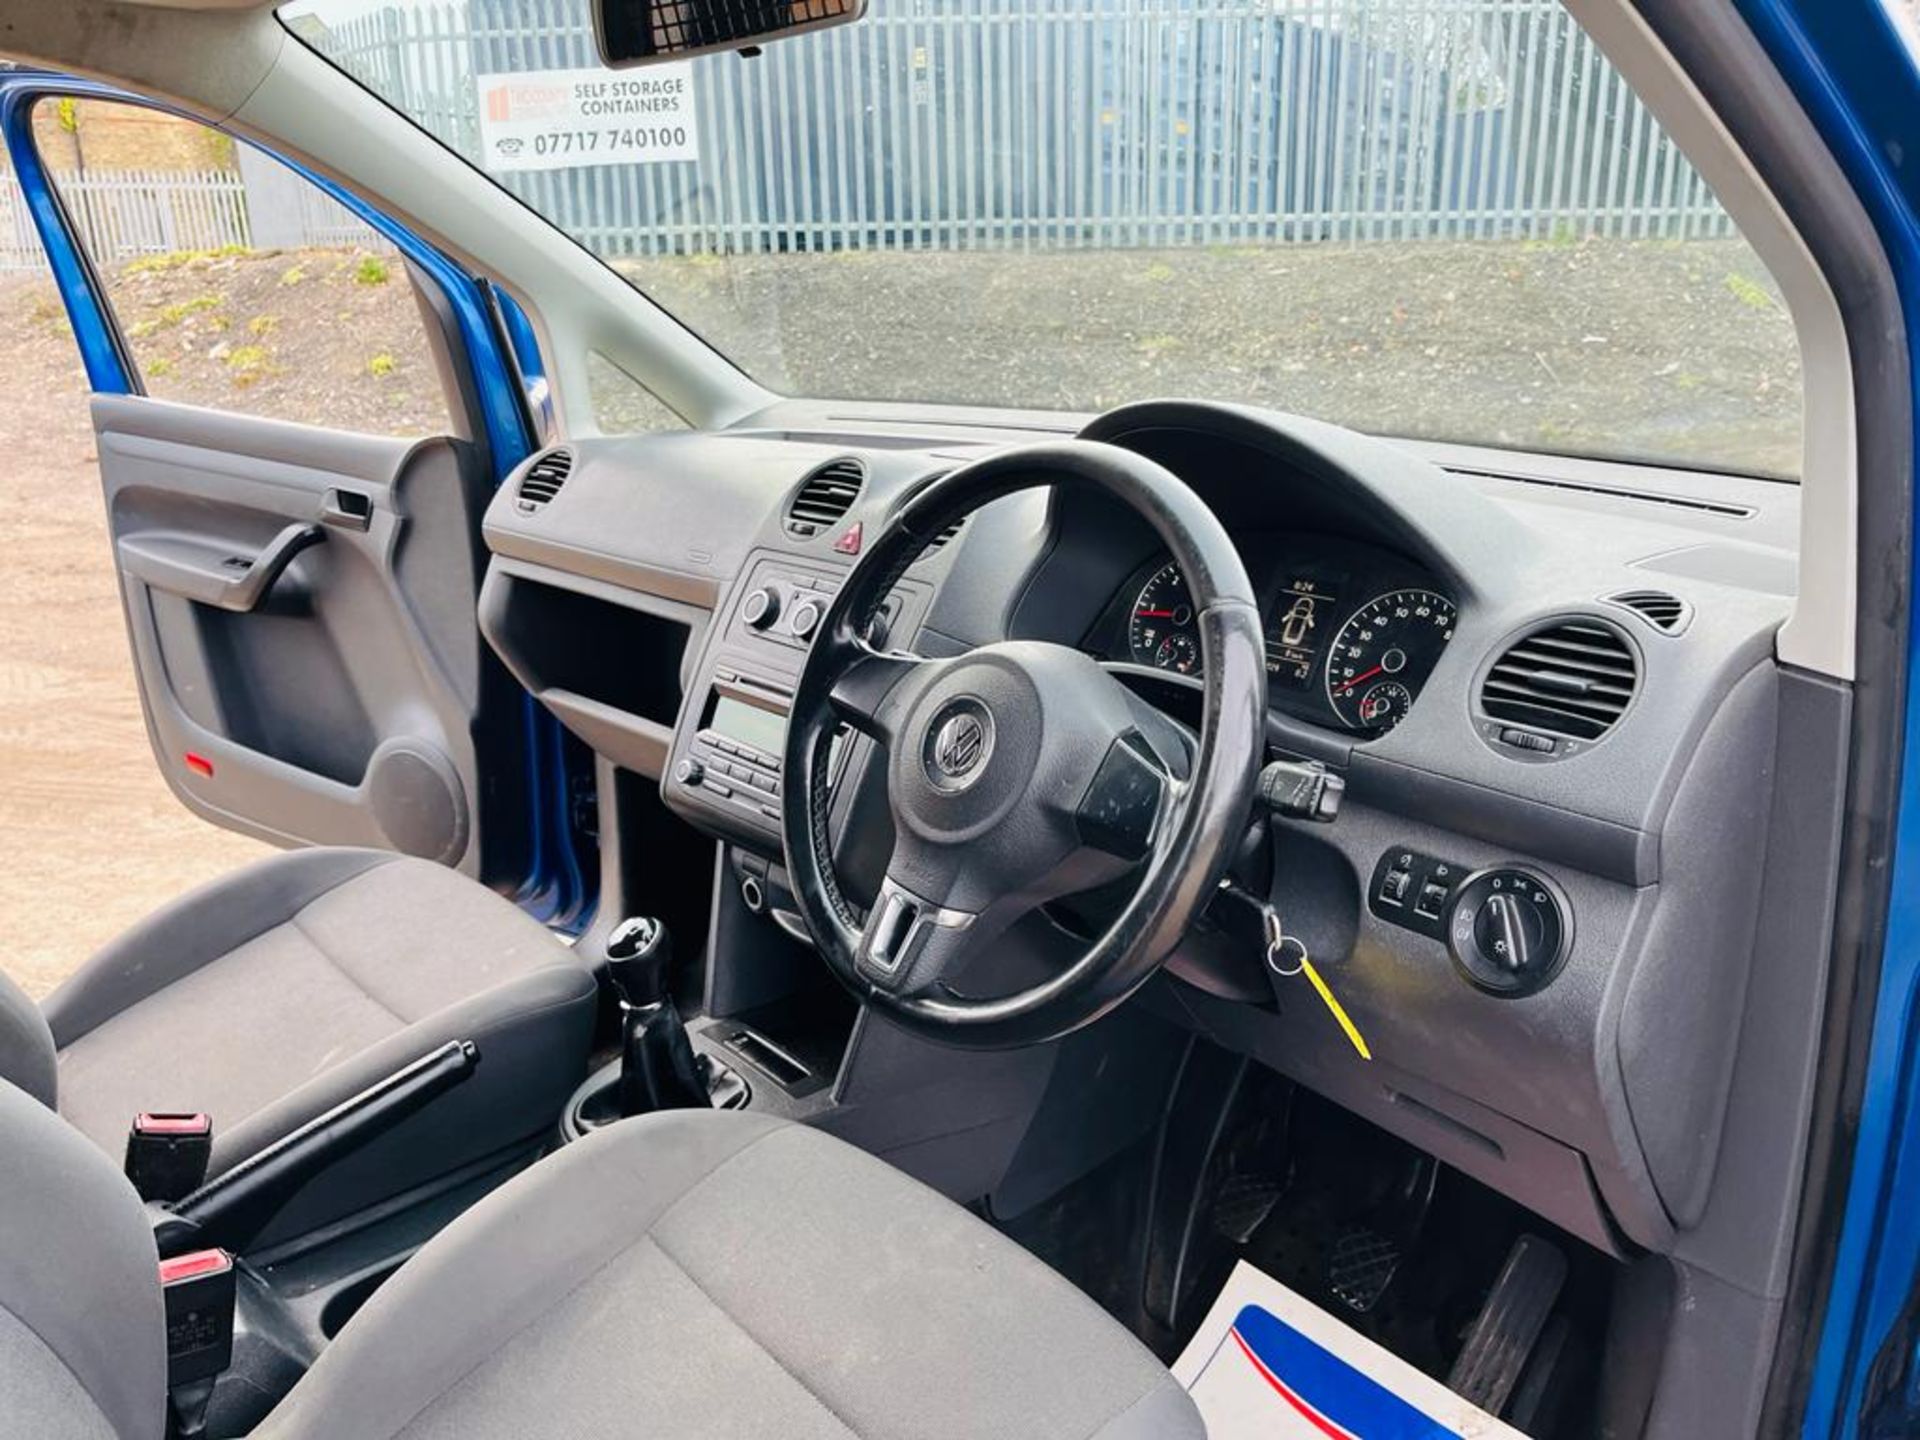 Volkswagen Caddy C20 1.6 TDI 102 Highline 2014 (64 Reg) - No Vat - A/C - Bluetooth Handsfree - Image 15 of 24